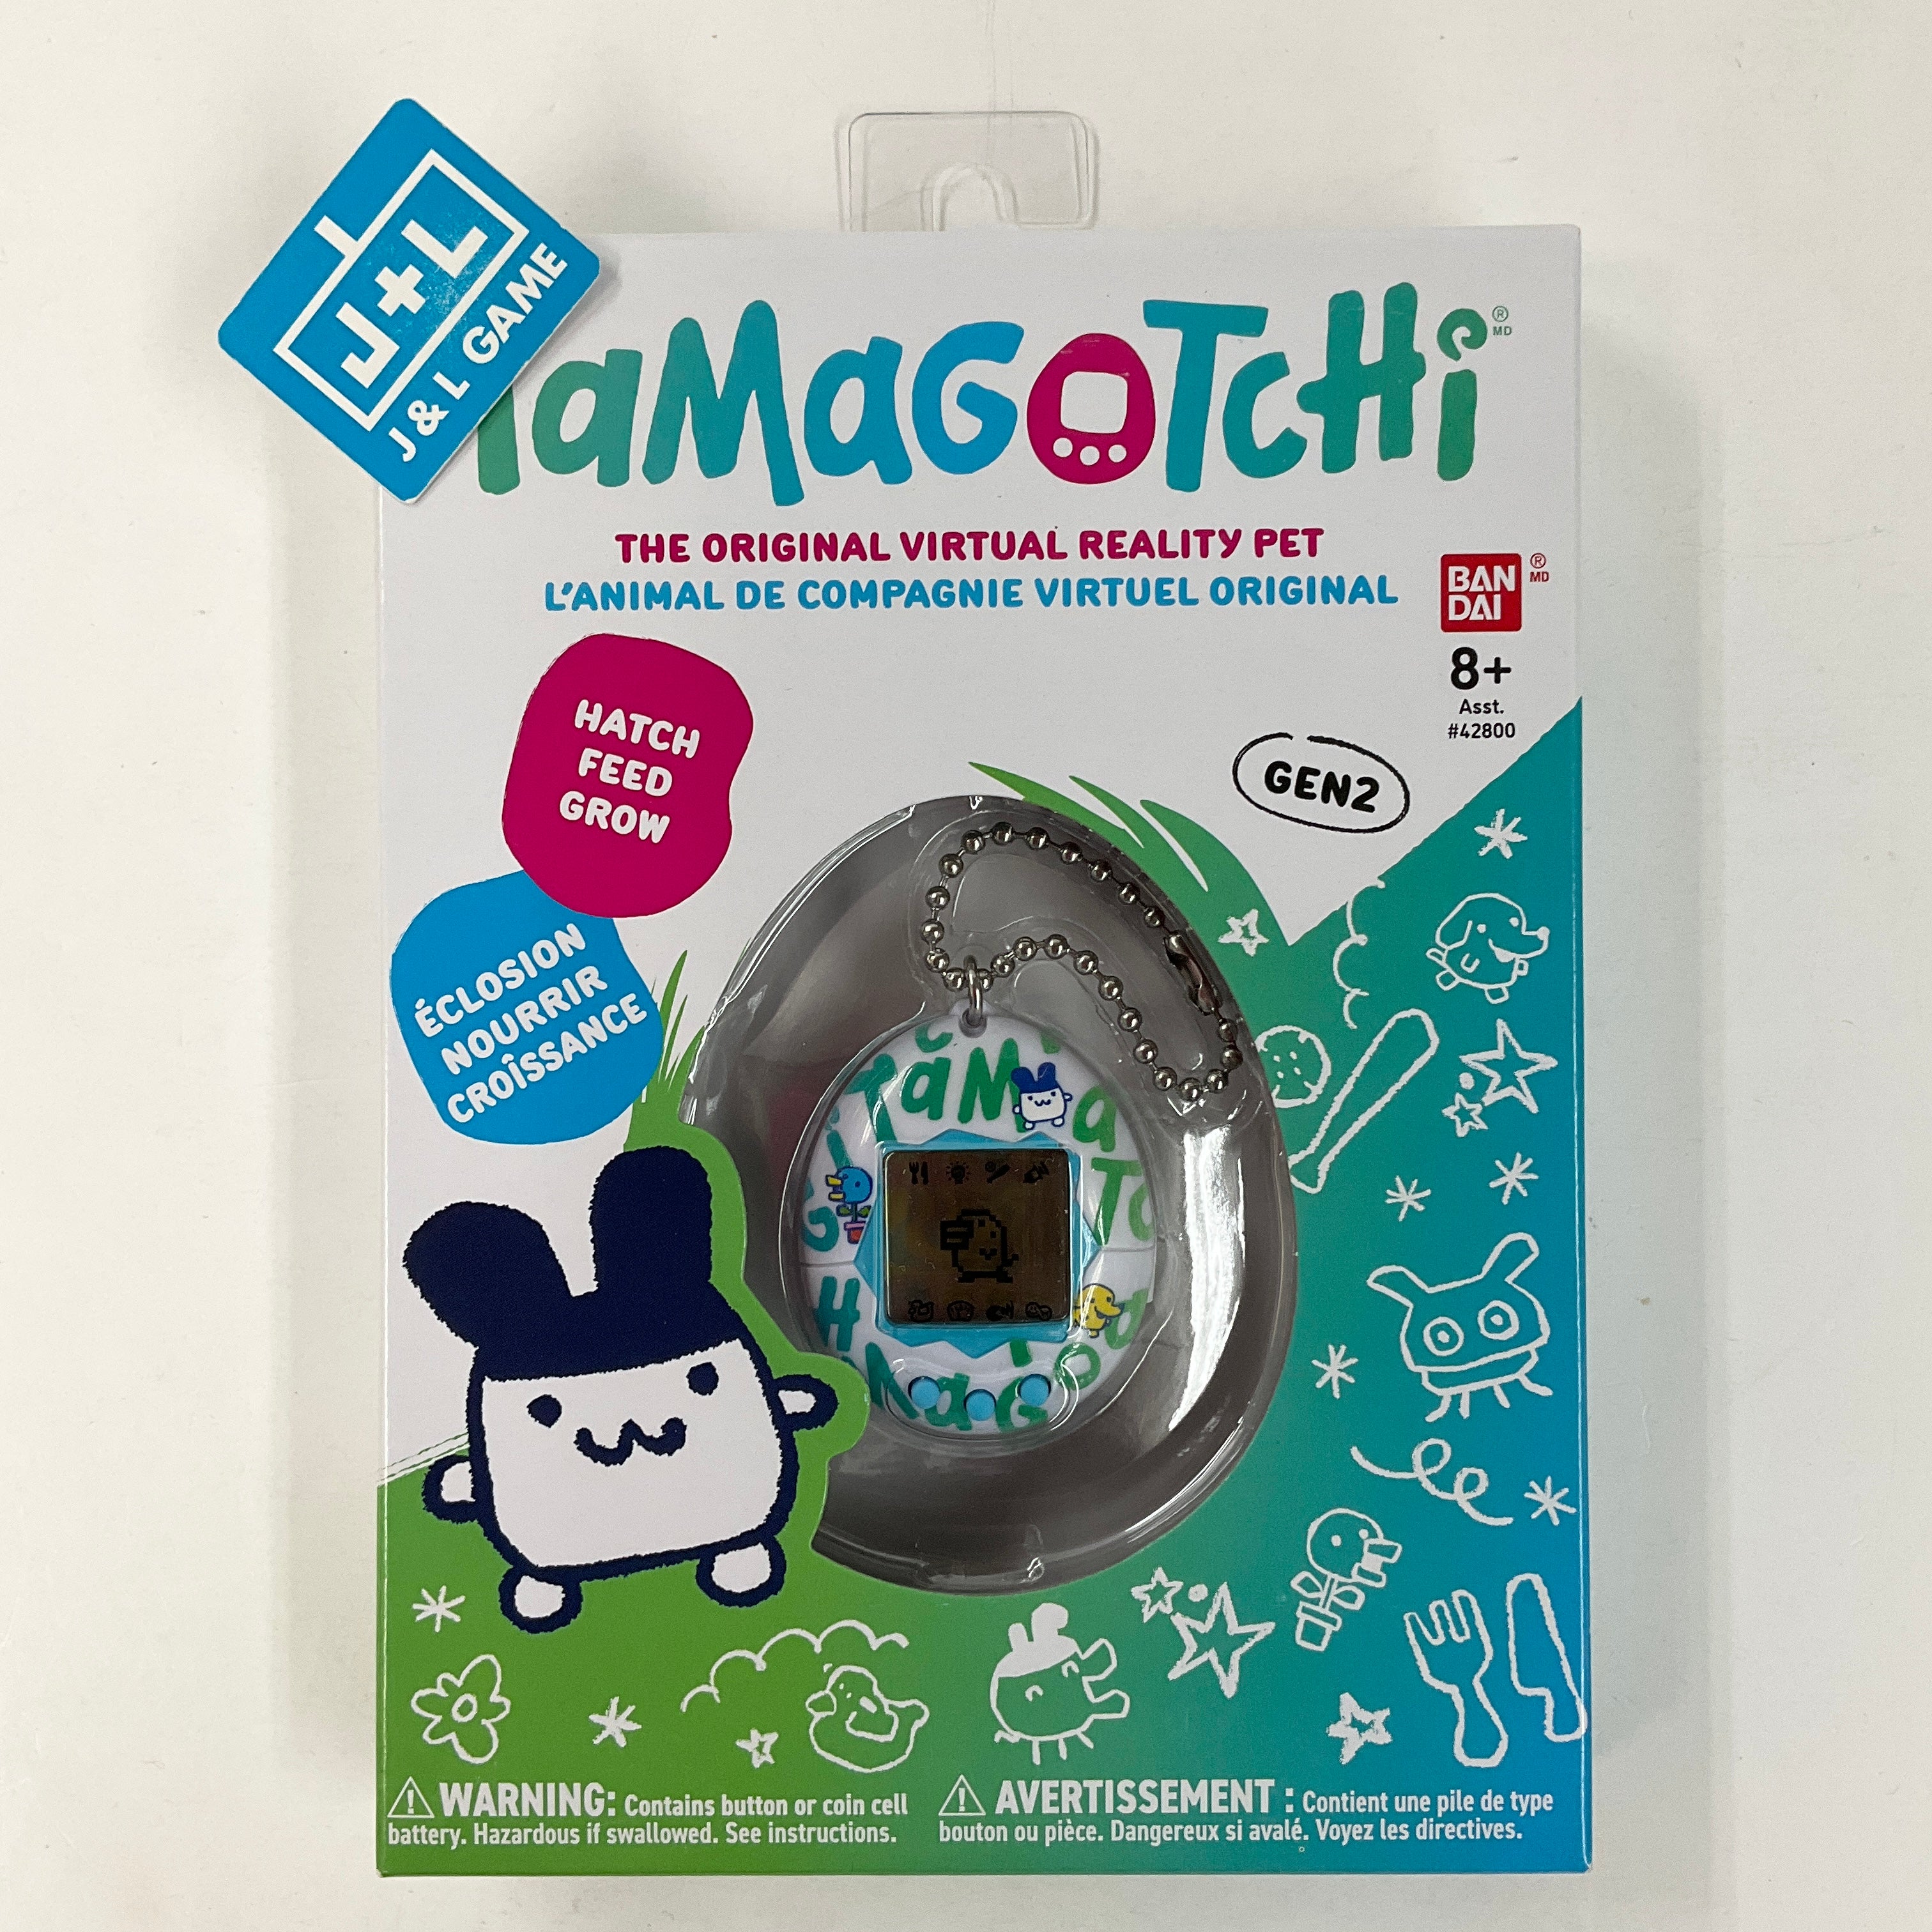 Tamagotchi - Sakura - Animal de compagnie électronique virtuel